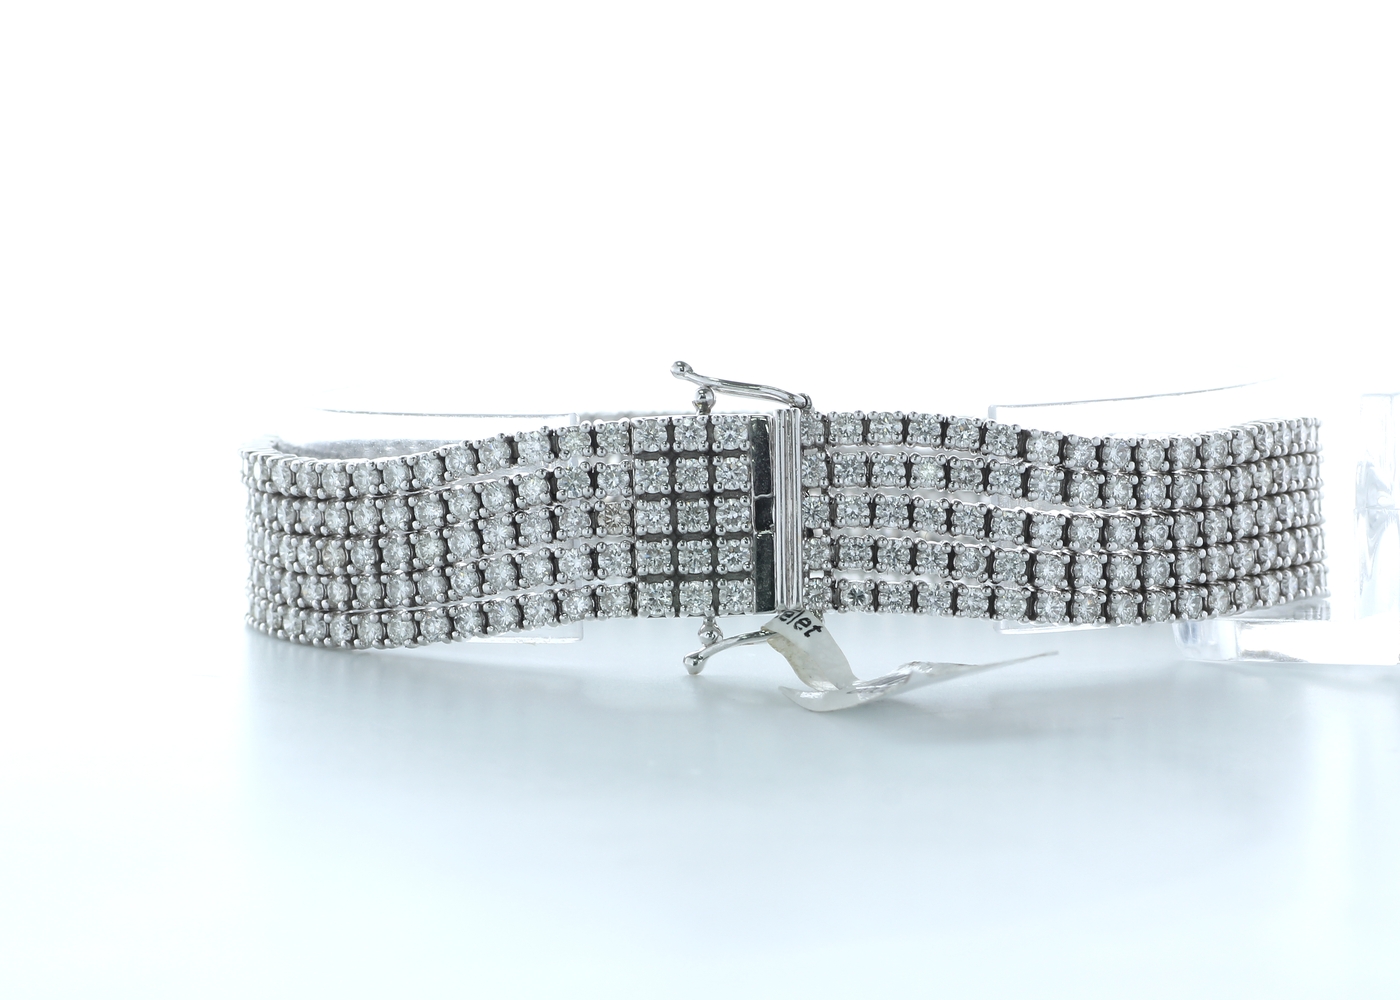 18k White Gold Five Row Diamond Bracelet 11.73 Carats - Image 2 of 4